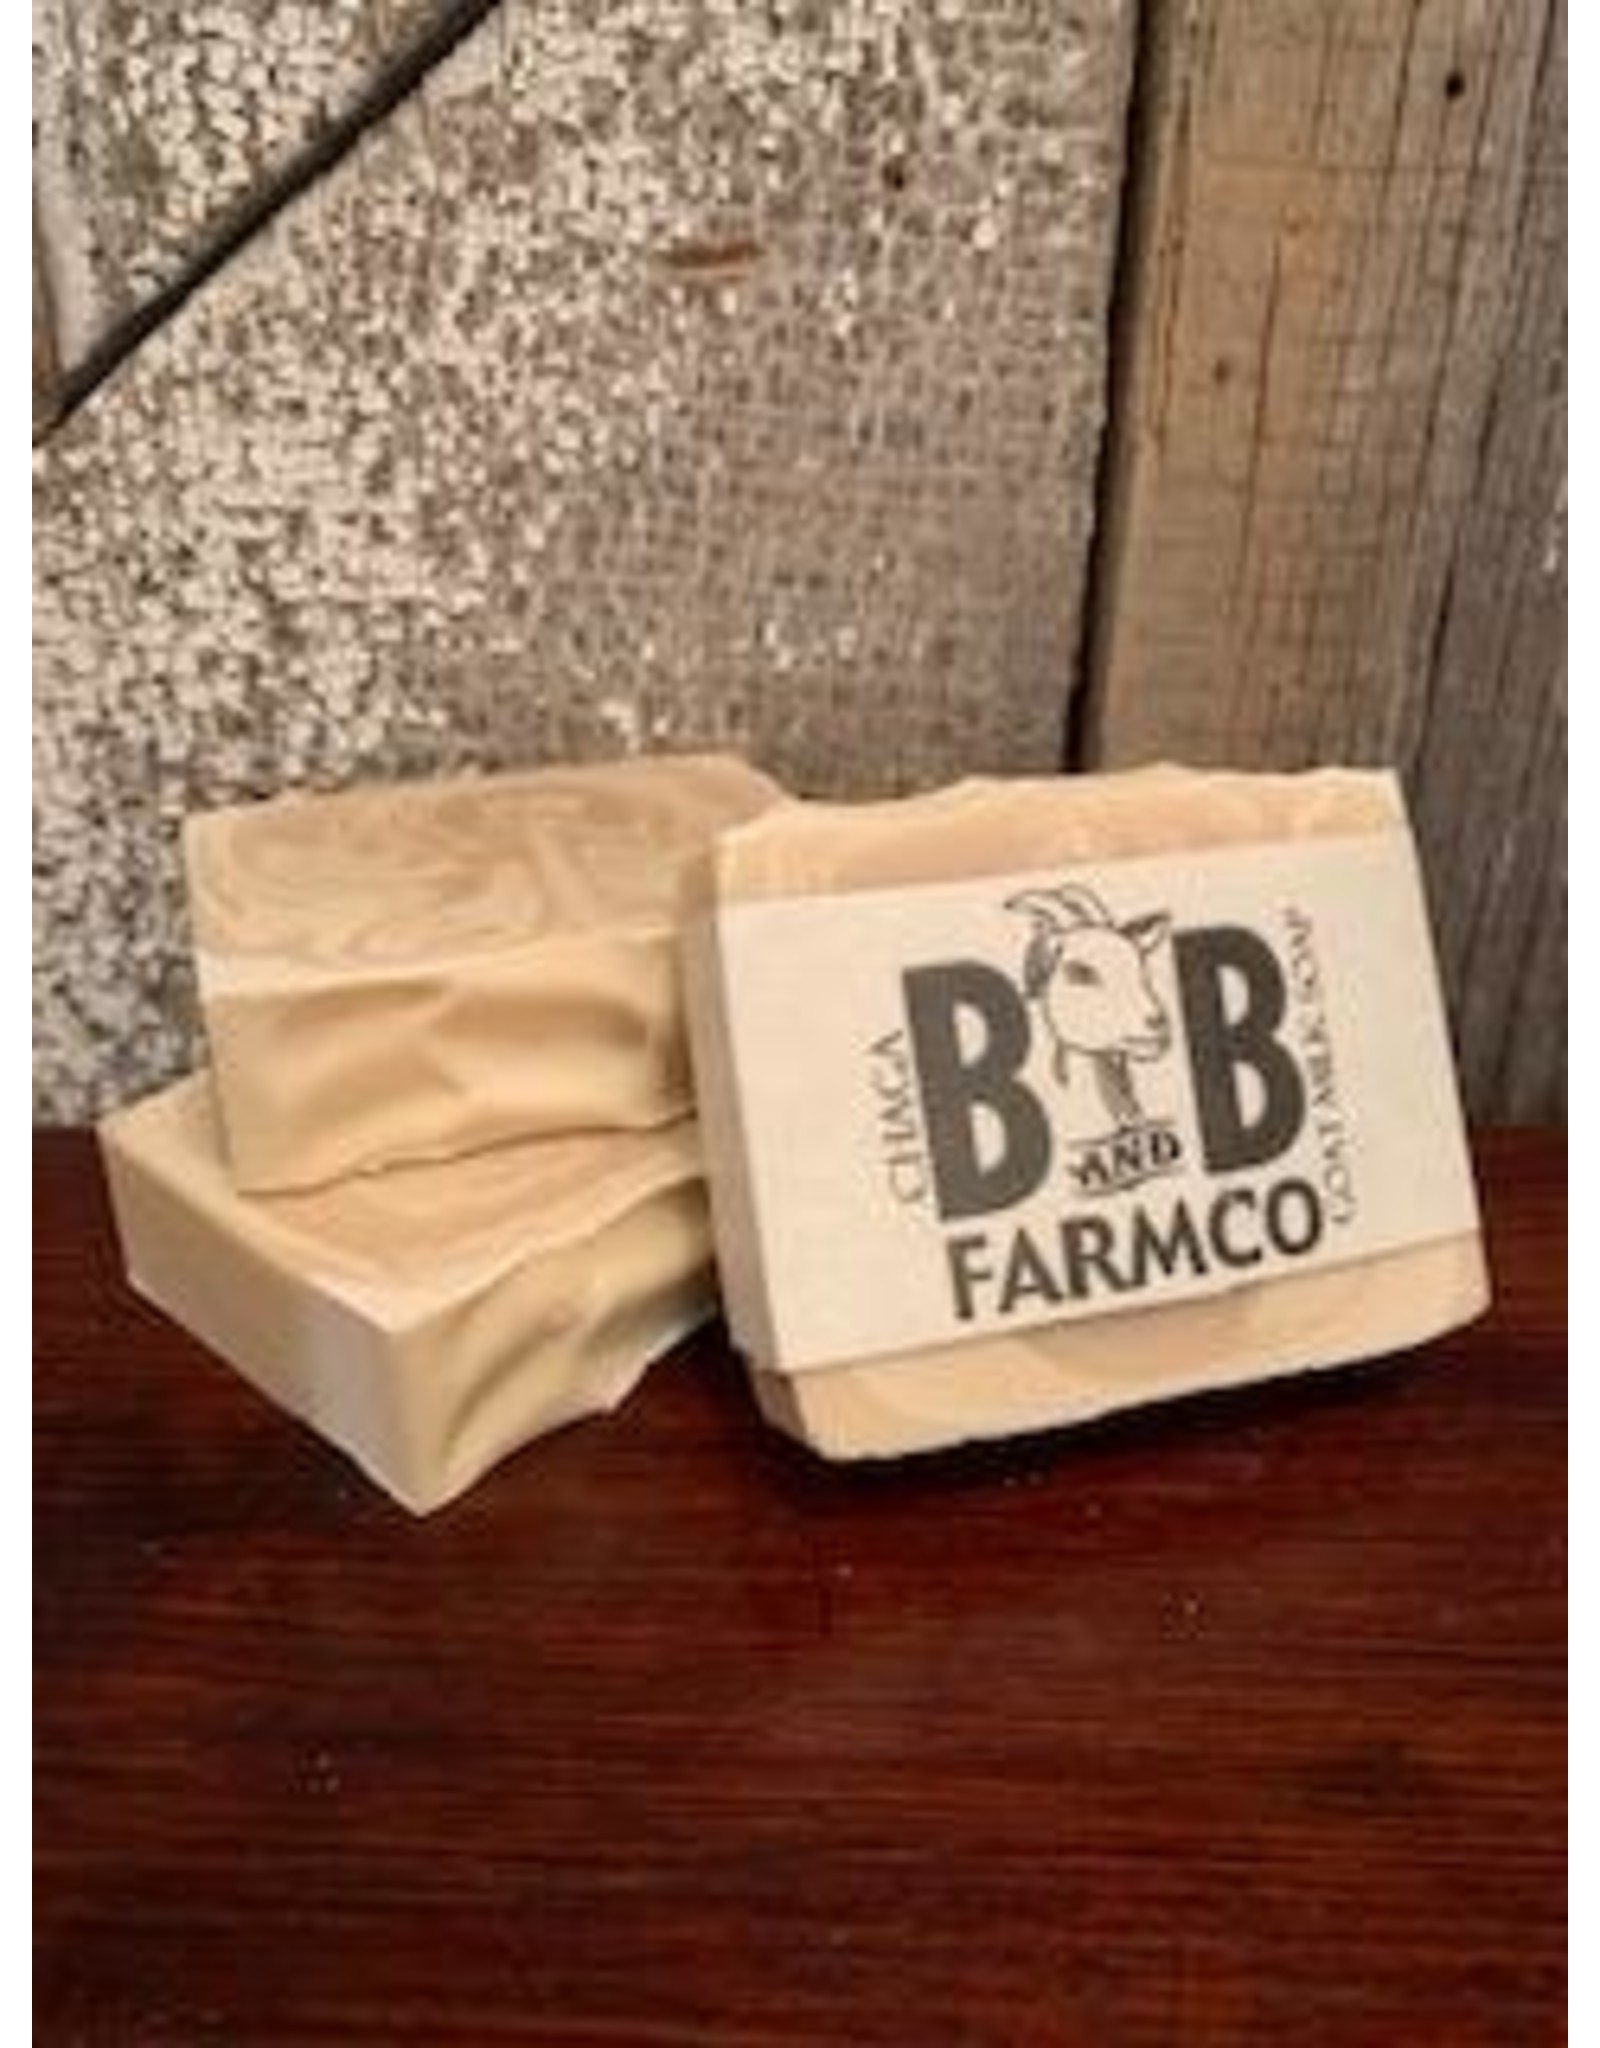 B and B Farm Co Goat Milk Soap